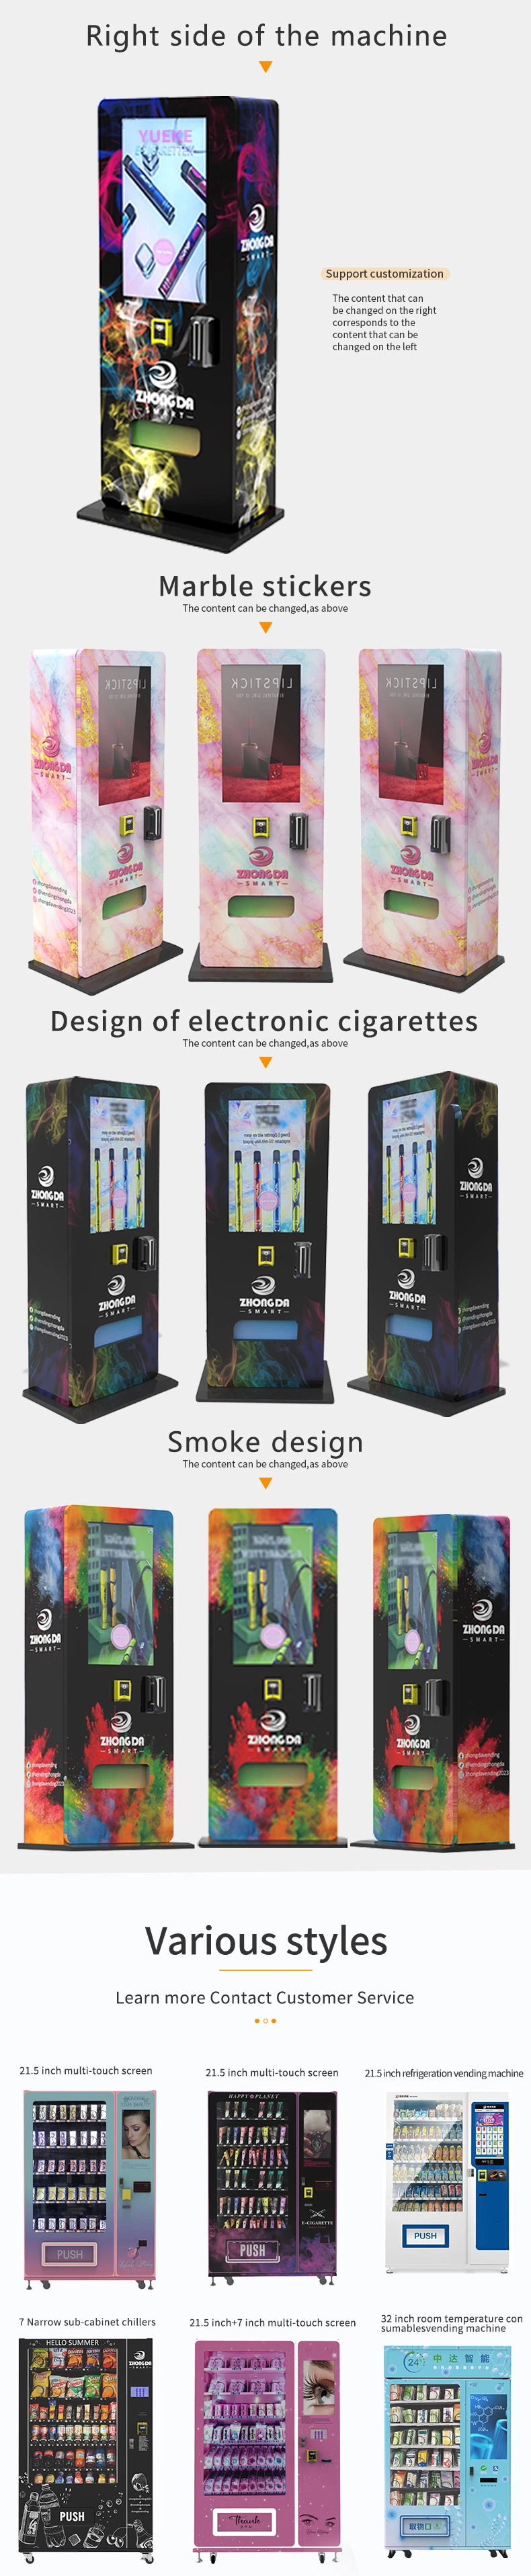 Hot Selling with Age Verification Vape E-Cigarette Vending Machine for USA Market